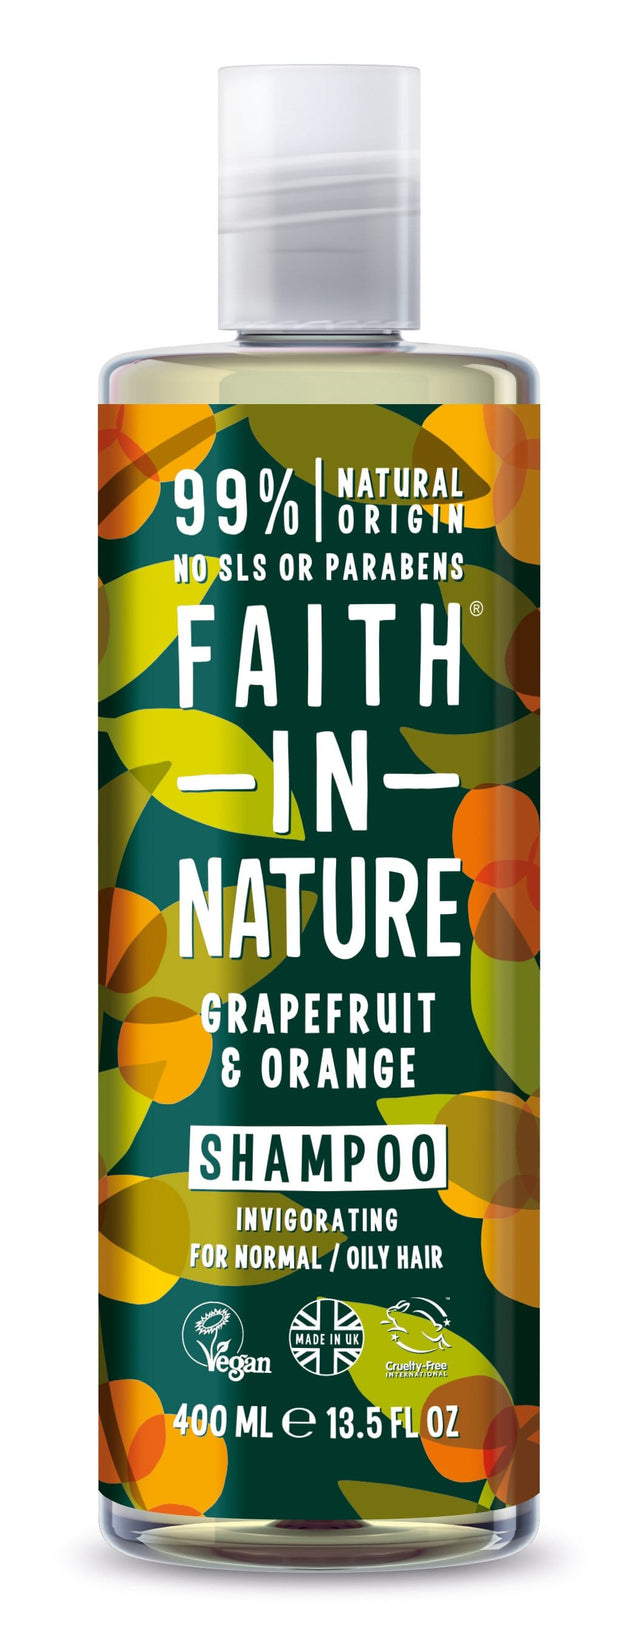 Faith in Nature Grapefruit & Orange Shampoo, 400ml